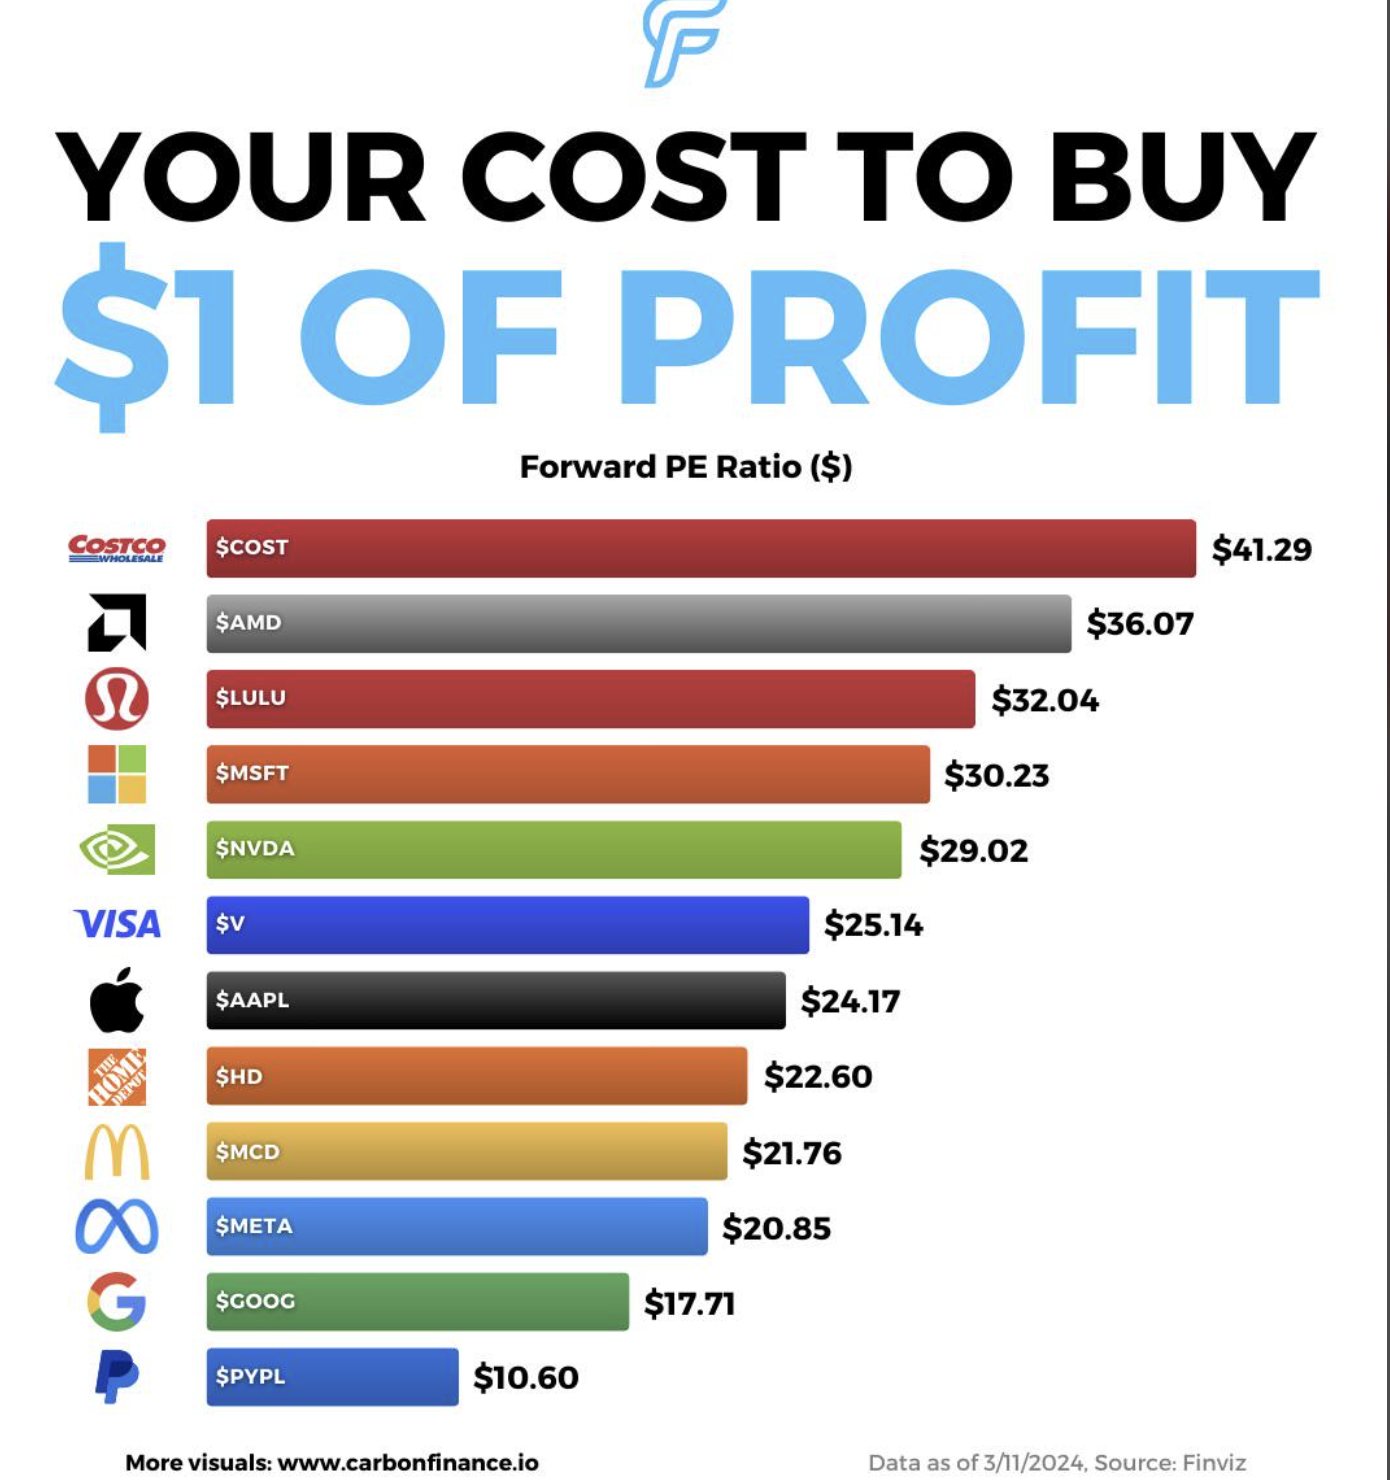 screenshot - F Your Cost To Buy $1 Of Profit Costco Scost Forward Pe Ratio $ Samd Slulu Smsft Snvda Visa Sv Saapl $Hd Msmcd Smeta Spypl $41.29 $36.07 $32.04 $30.23 $29.02 $25.14 $24.17 $22.60 $21.76 $20.85 $17.71 $10.60 More visuals Data as of 3112024, So